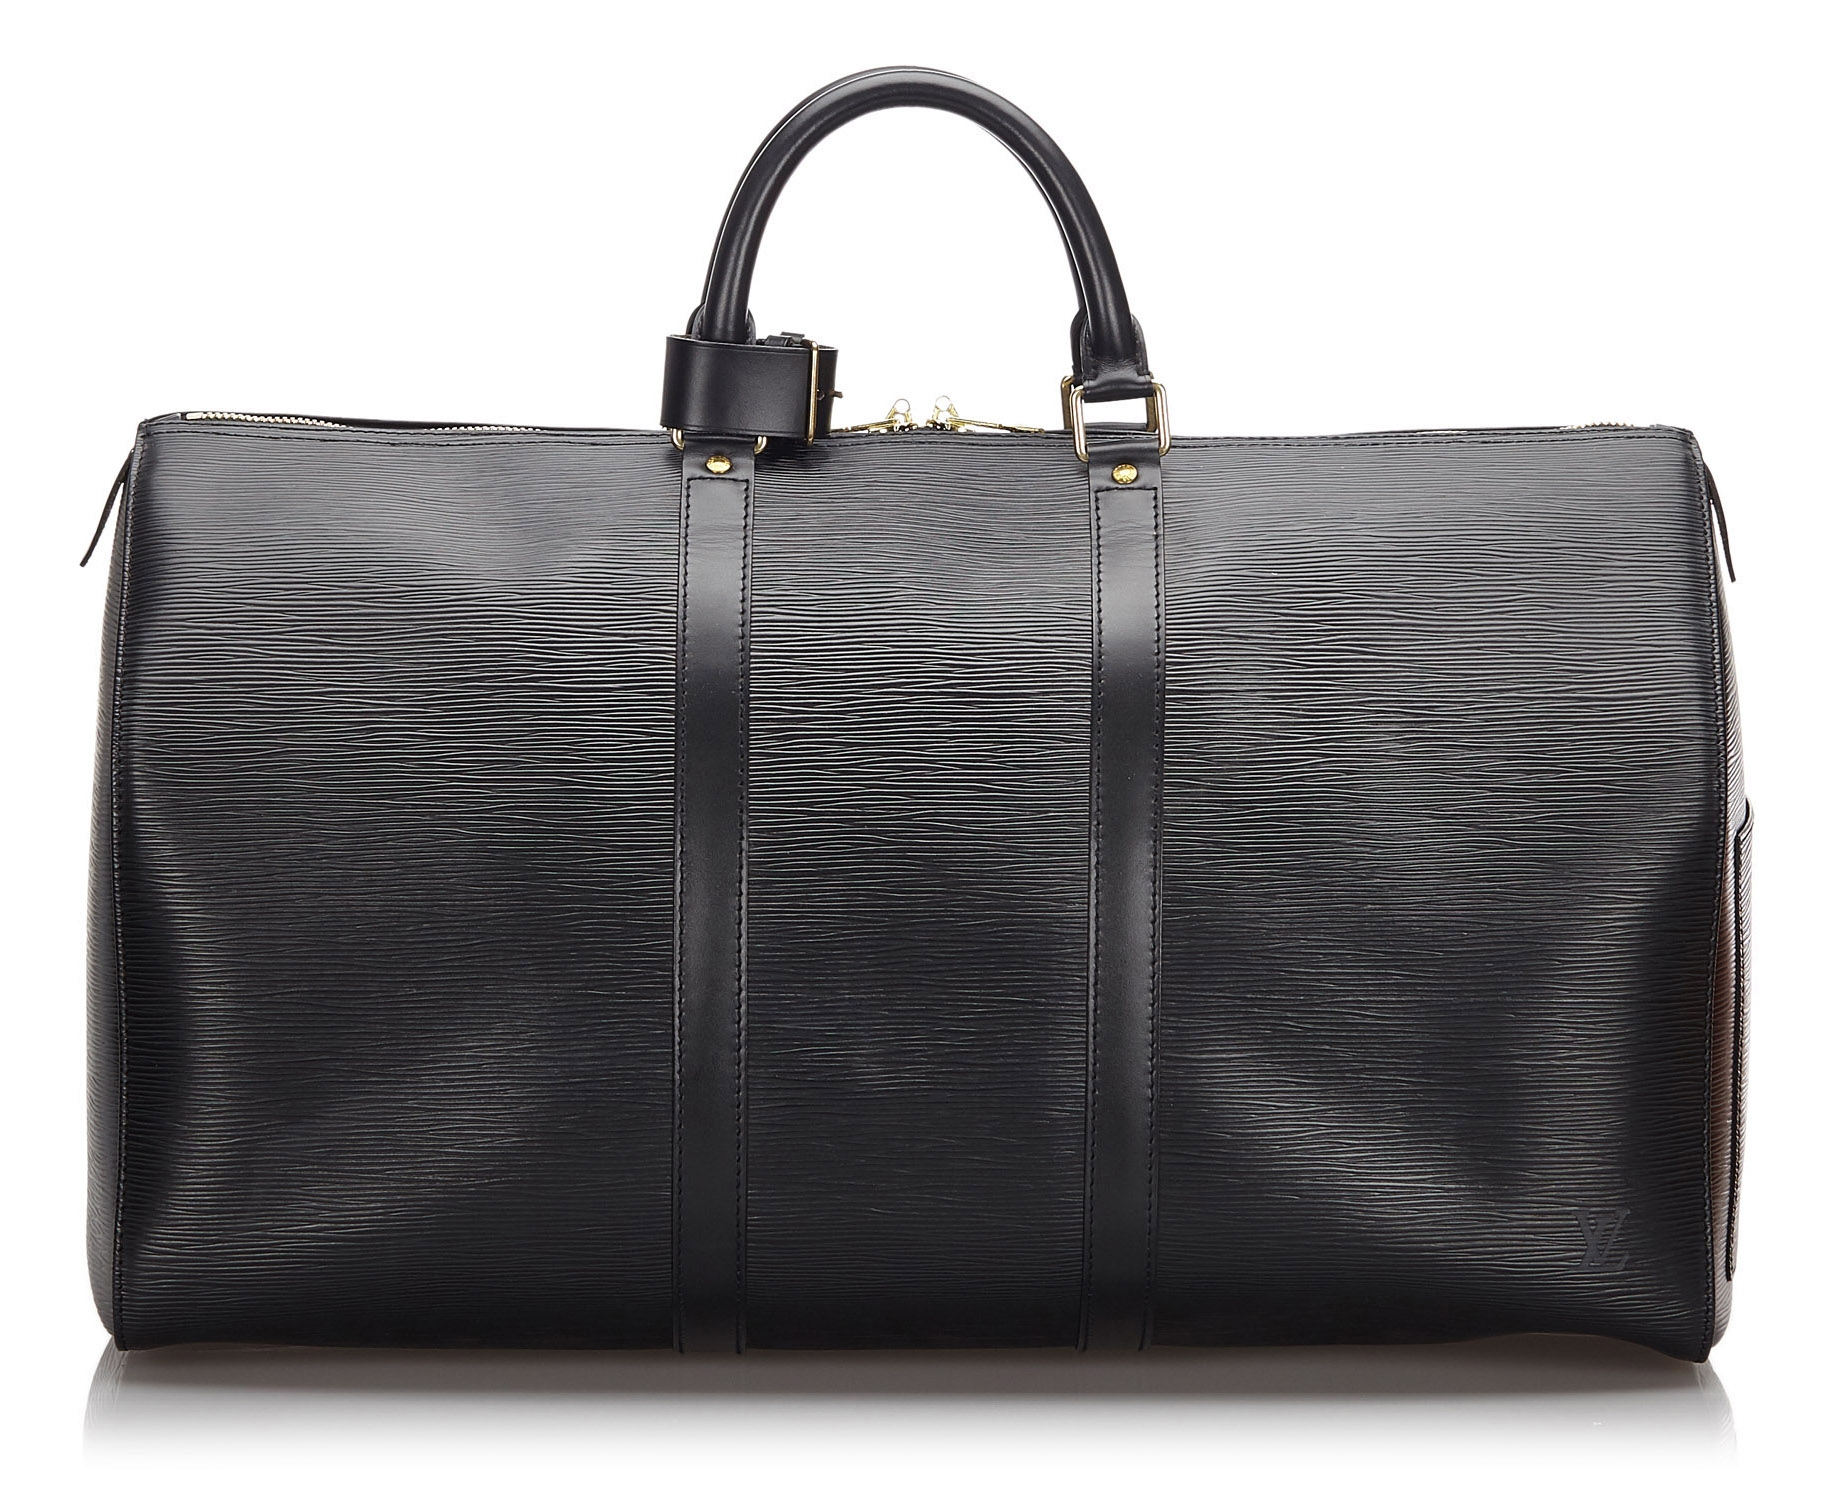 Louis Vuitton Keepall 55 cm travel bag in black epi leather